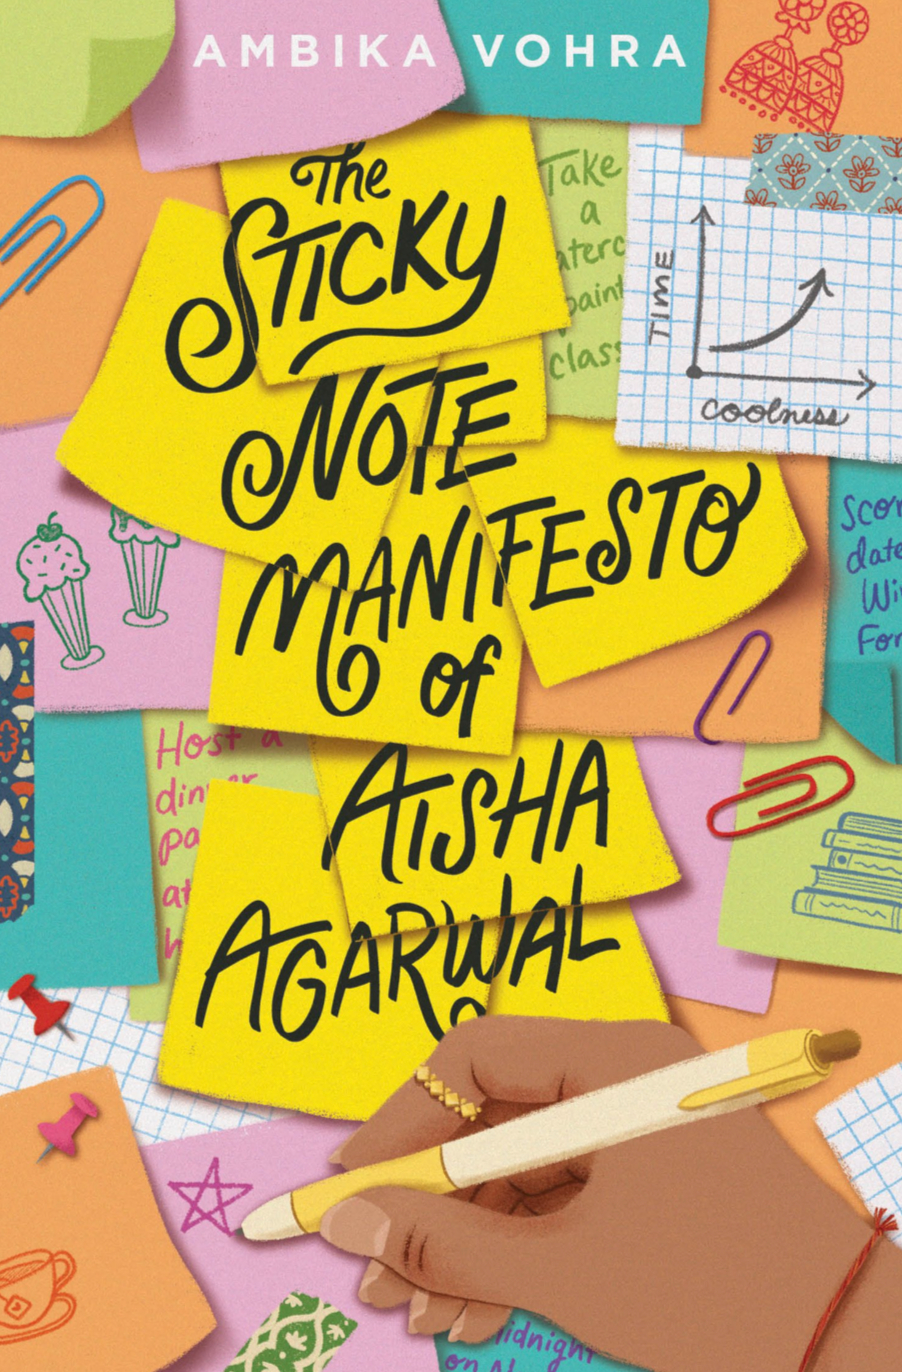 The Sticky Note Manifesto of Aisha Agarwal